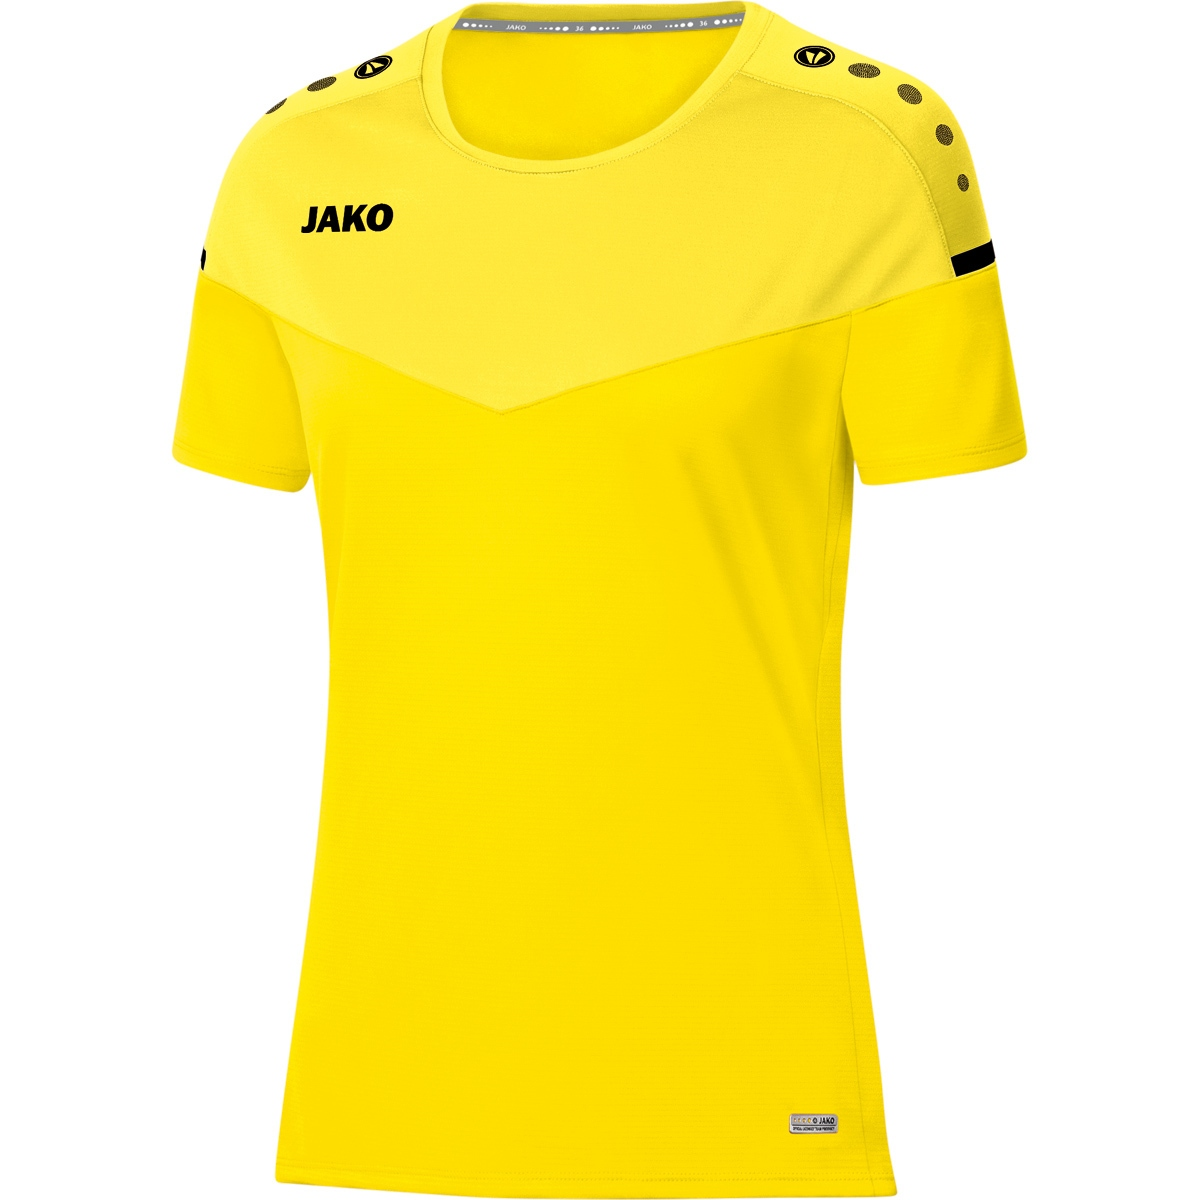 40, T-Shirt Damen, JAKO 2.0 light, Gr. 6120 Champ citro/citro